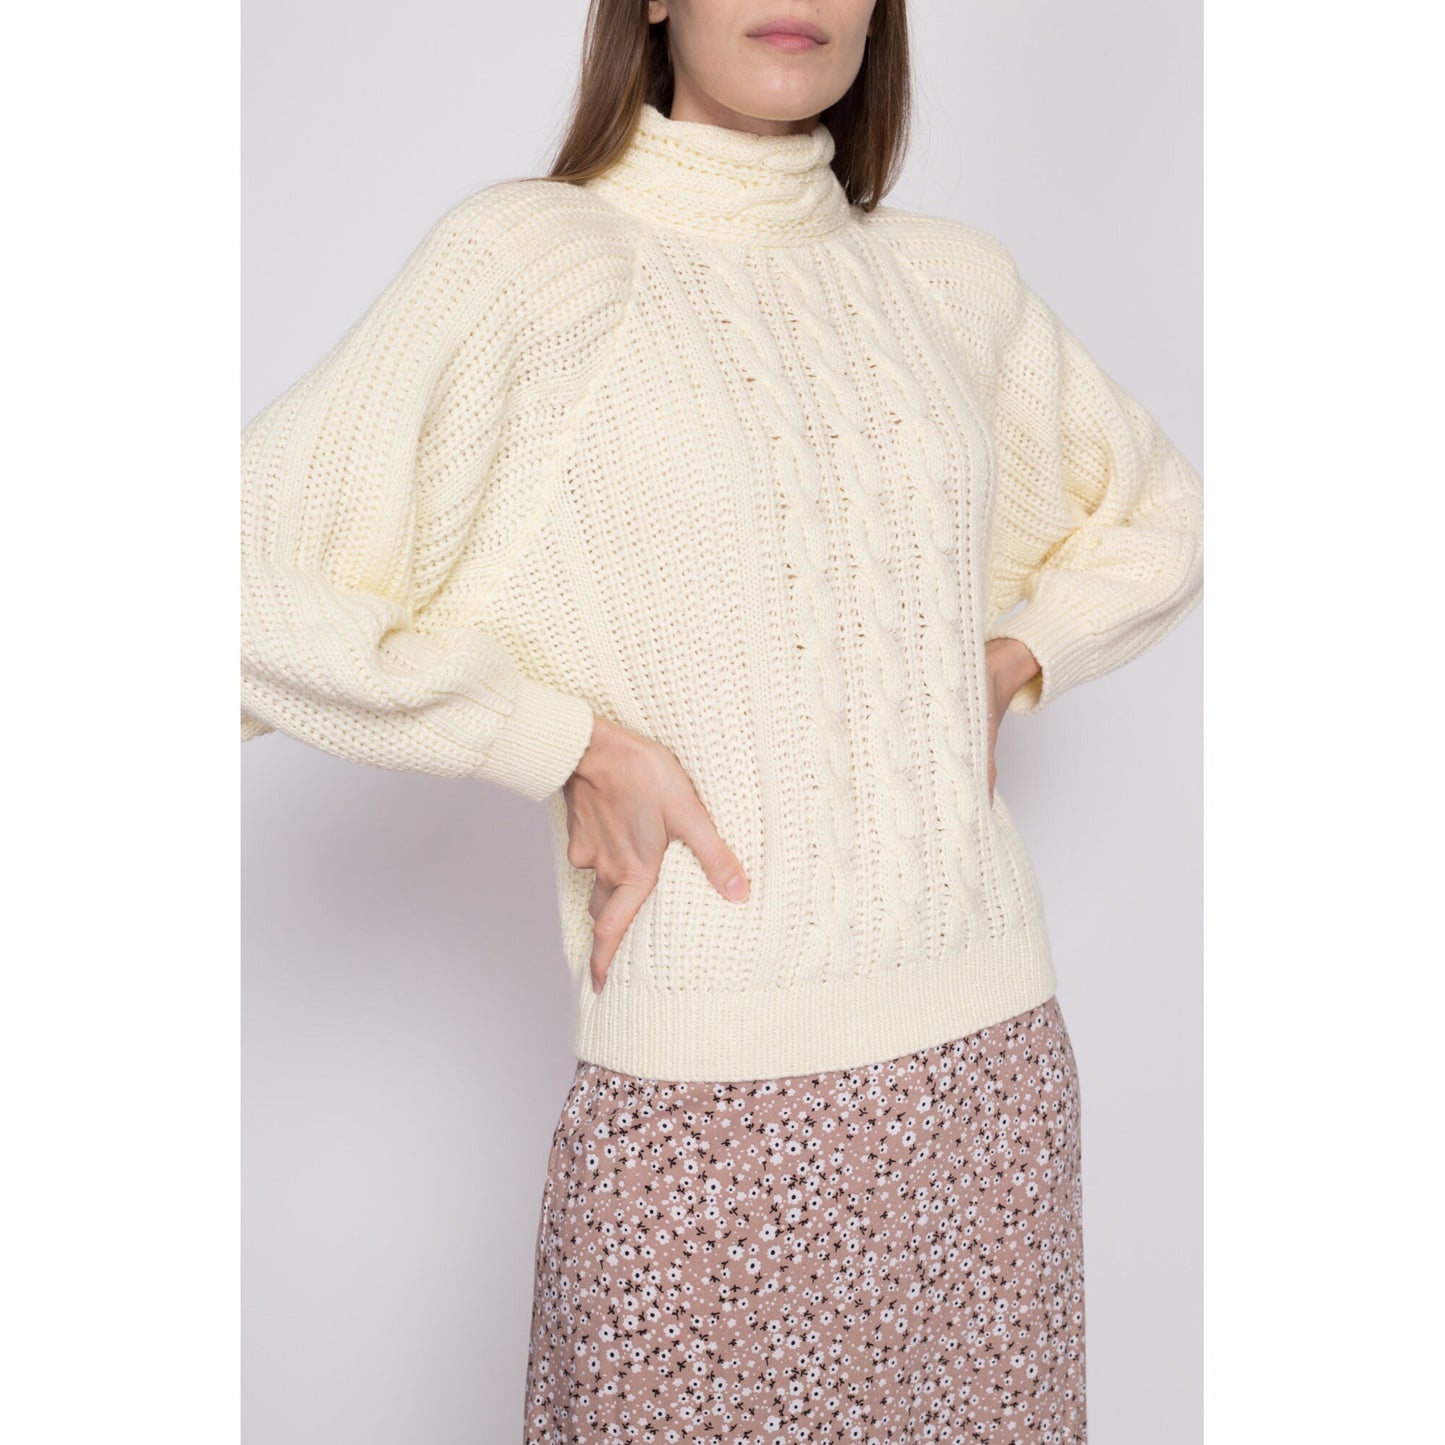 Medium 80s Cable Knit Turtleneck Sweater | Vintage Cream Knit Pullover Jumper